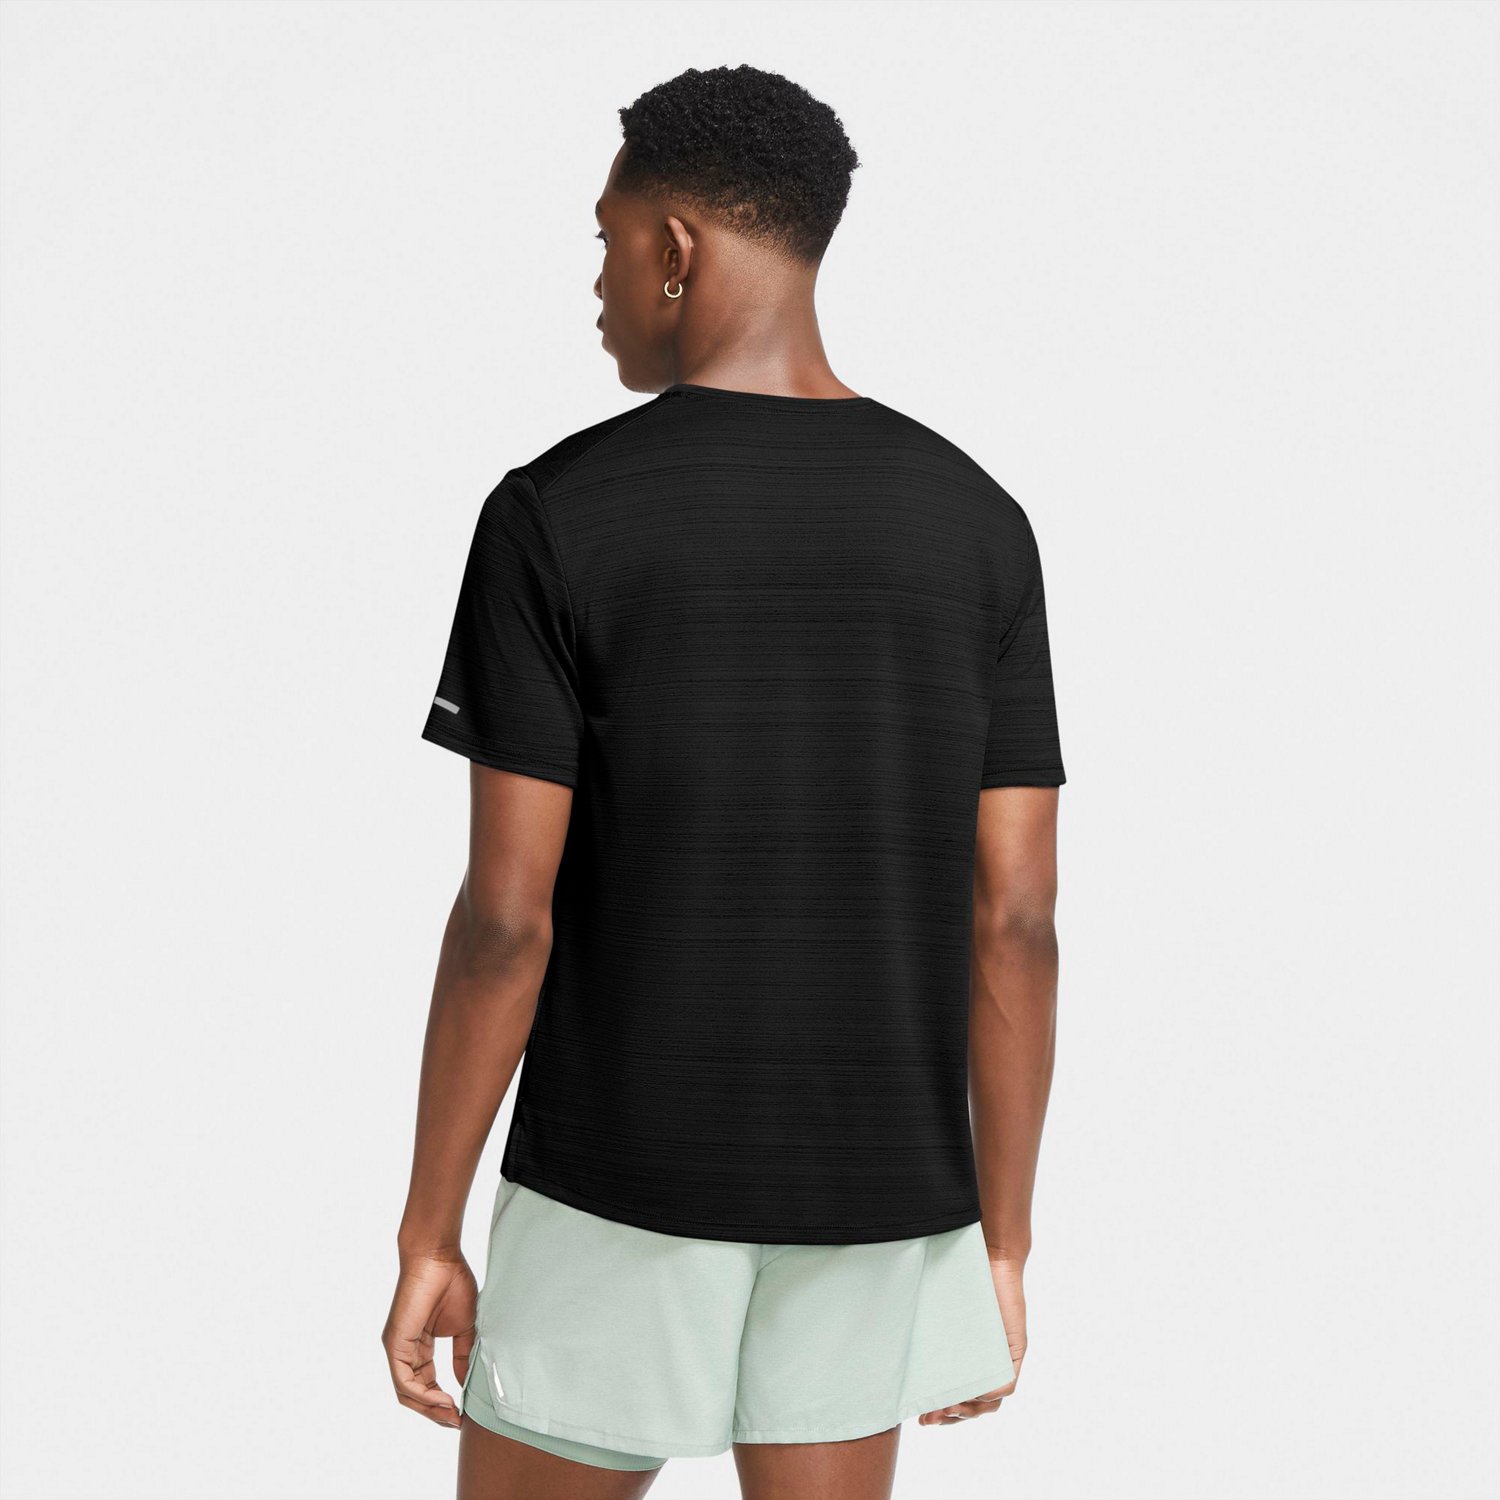 Nike Dri Fit Miler Short Sleeve T-Shirt Black